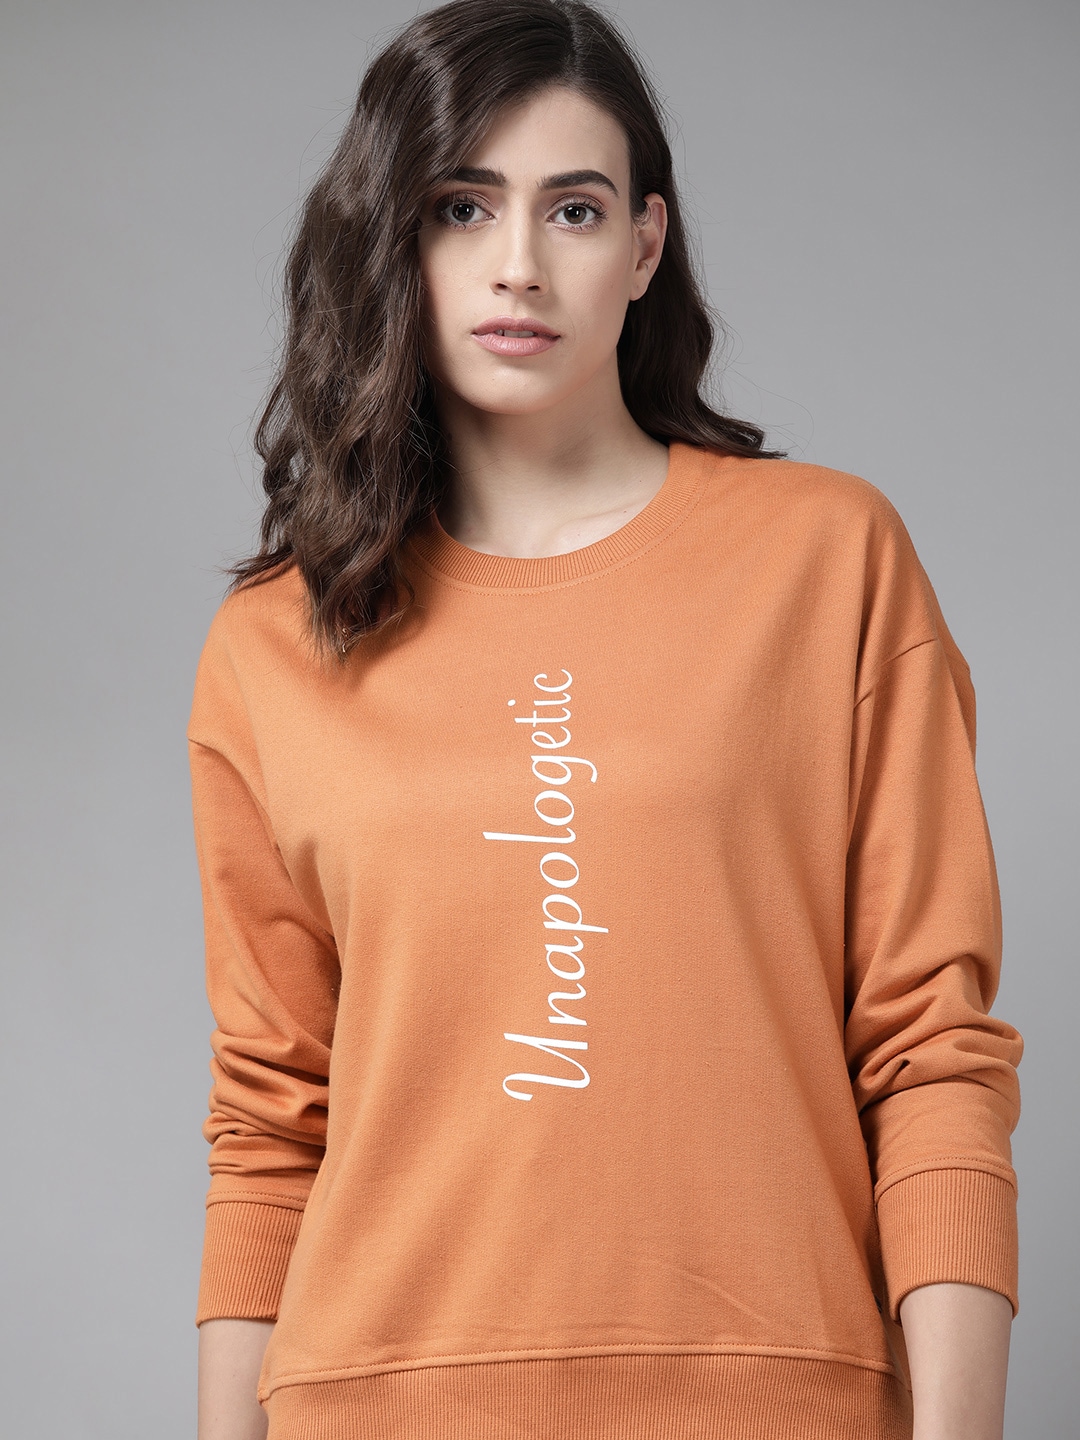 Roadster Women Rust Orange & White Typography Print Sweatshirt Price in India